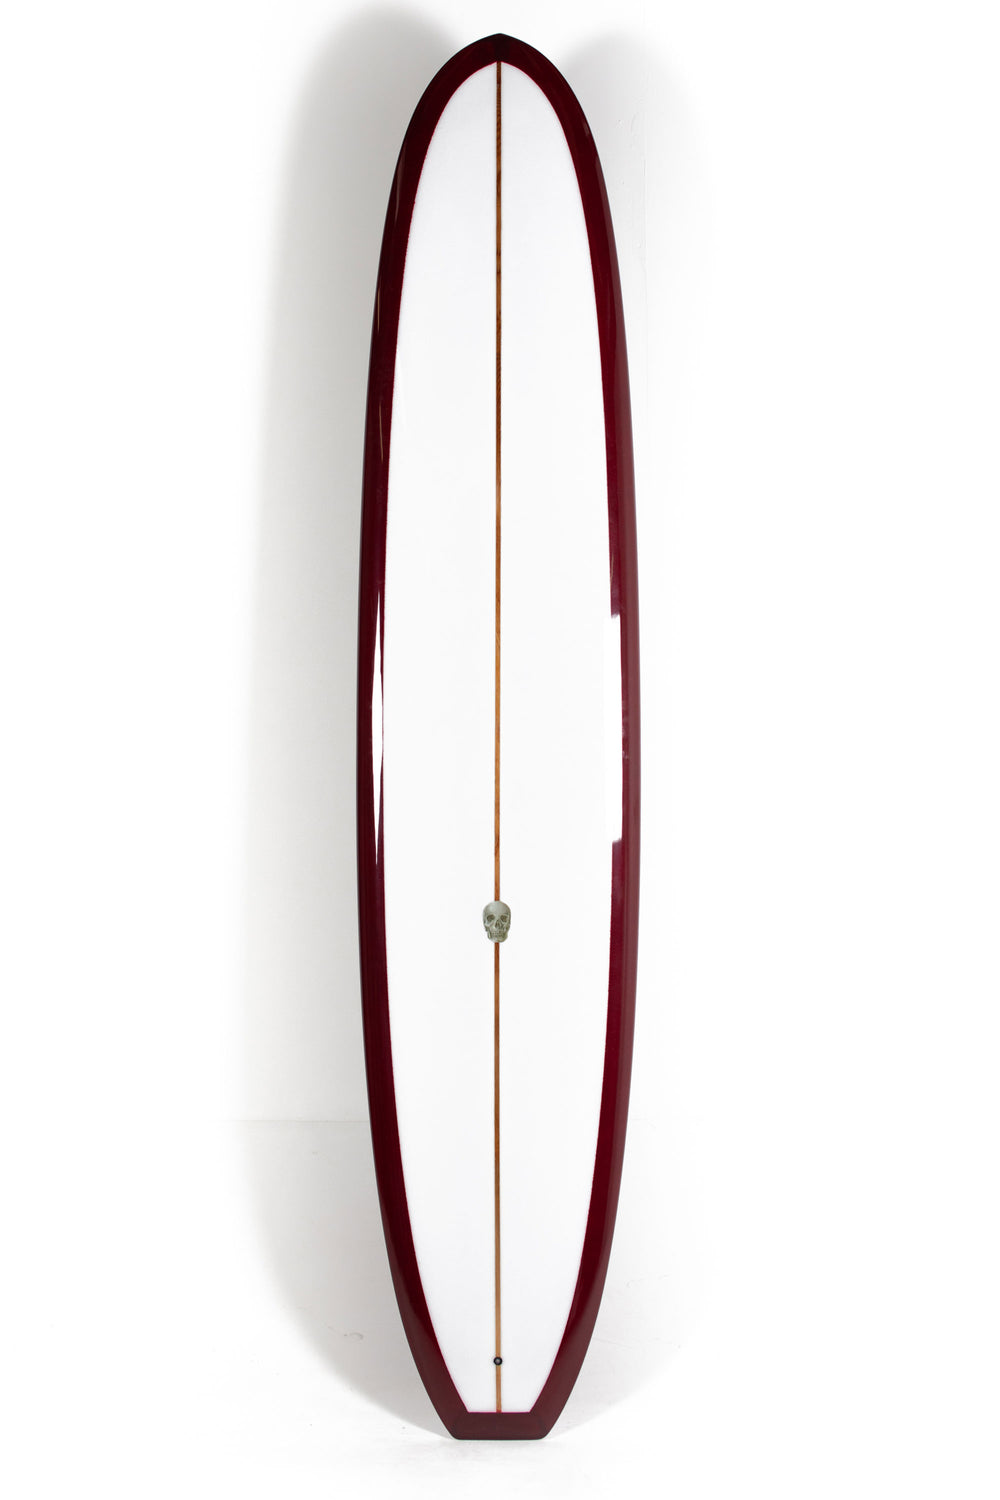 Pukas Surf Shop - Christenson Surfboard  - SCARLET BEGONIA by Chris Christenson - 9'7” x 23 3/8